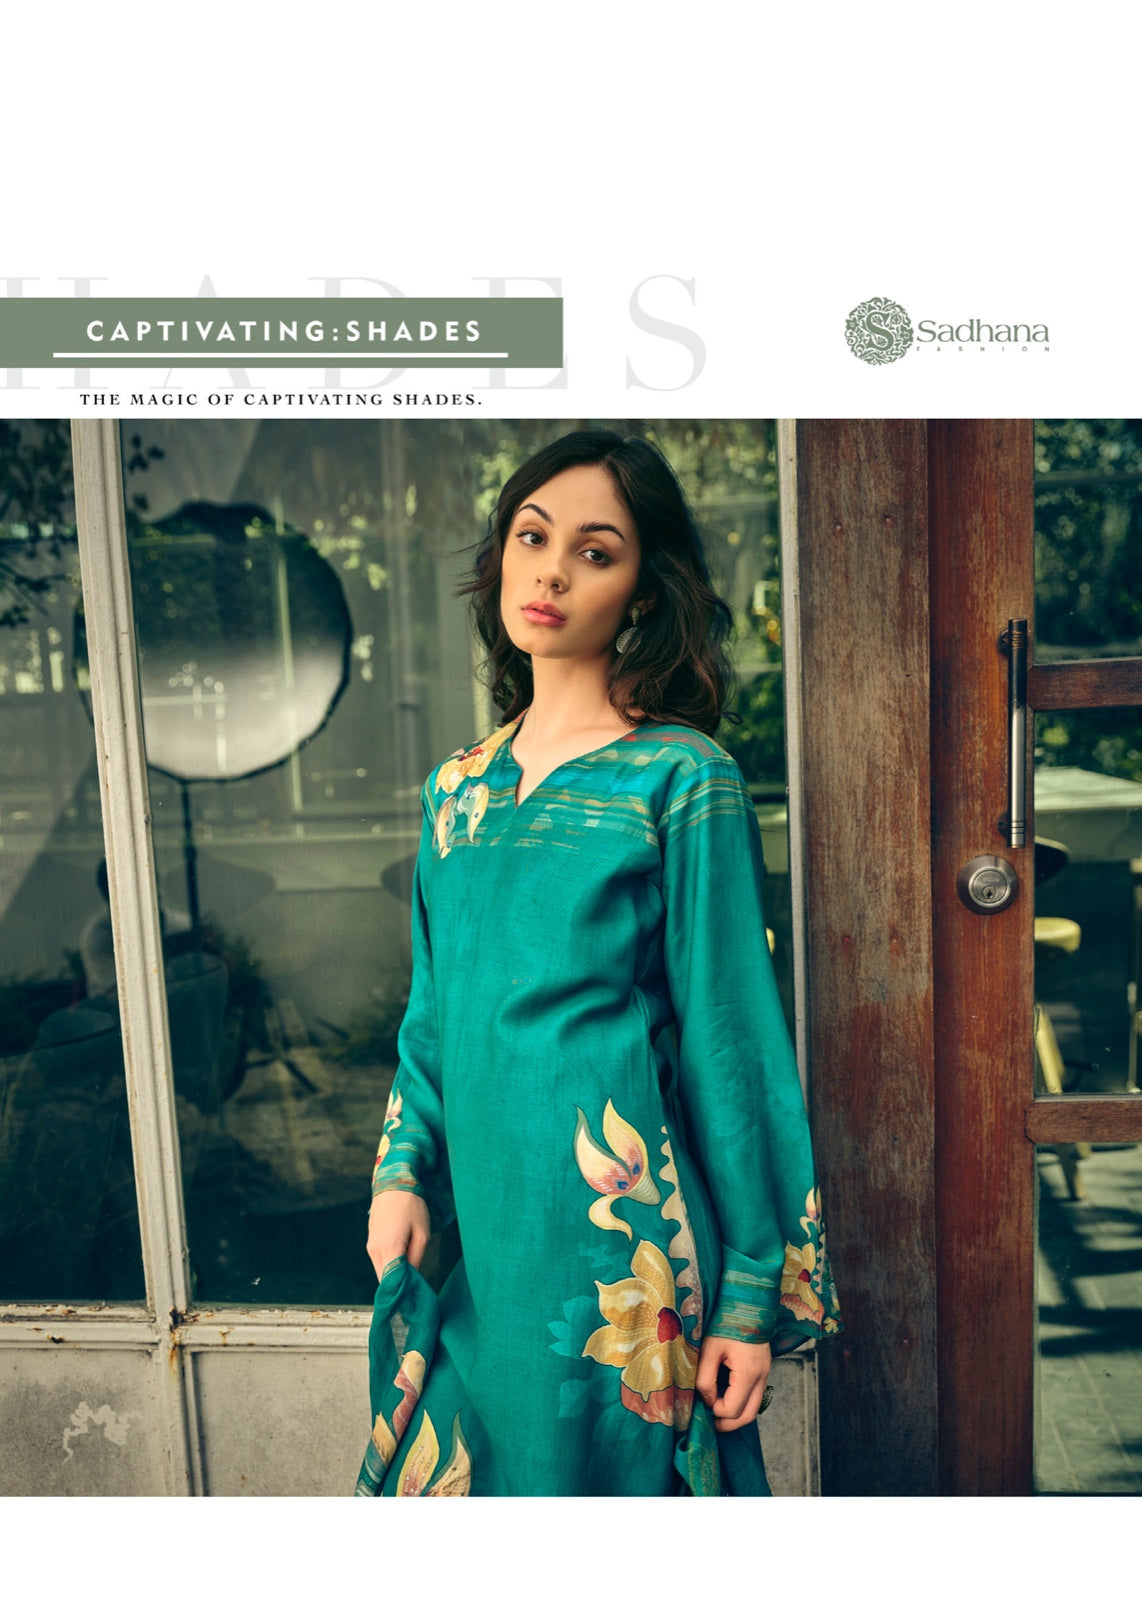 Minerva Sadhana Muslin Pant Style Suits